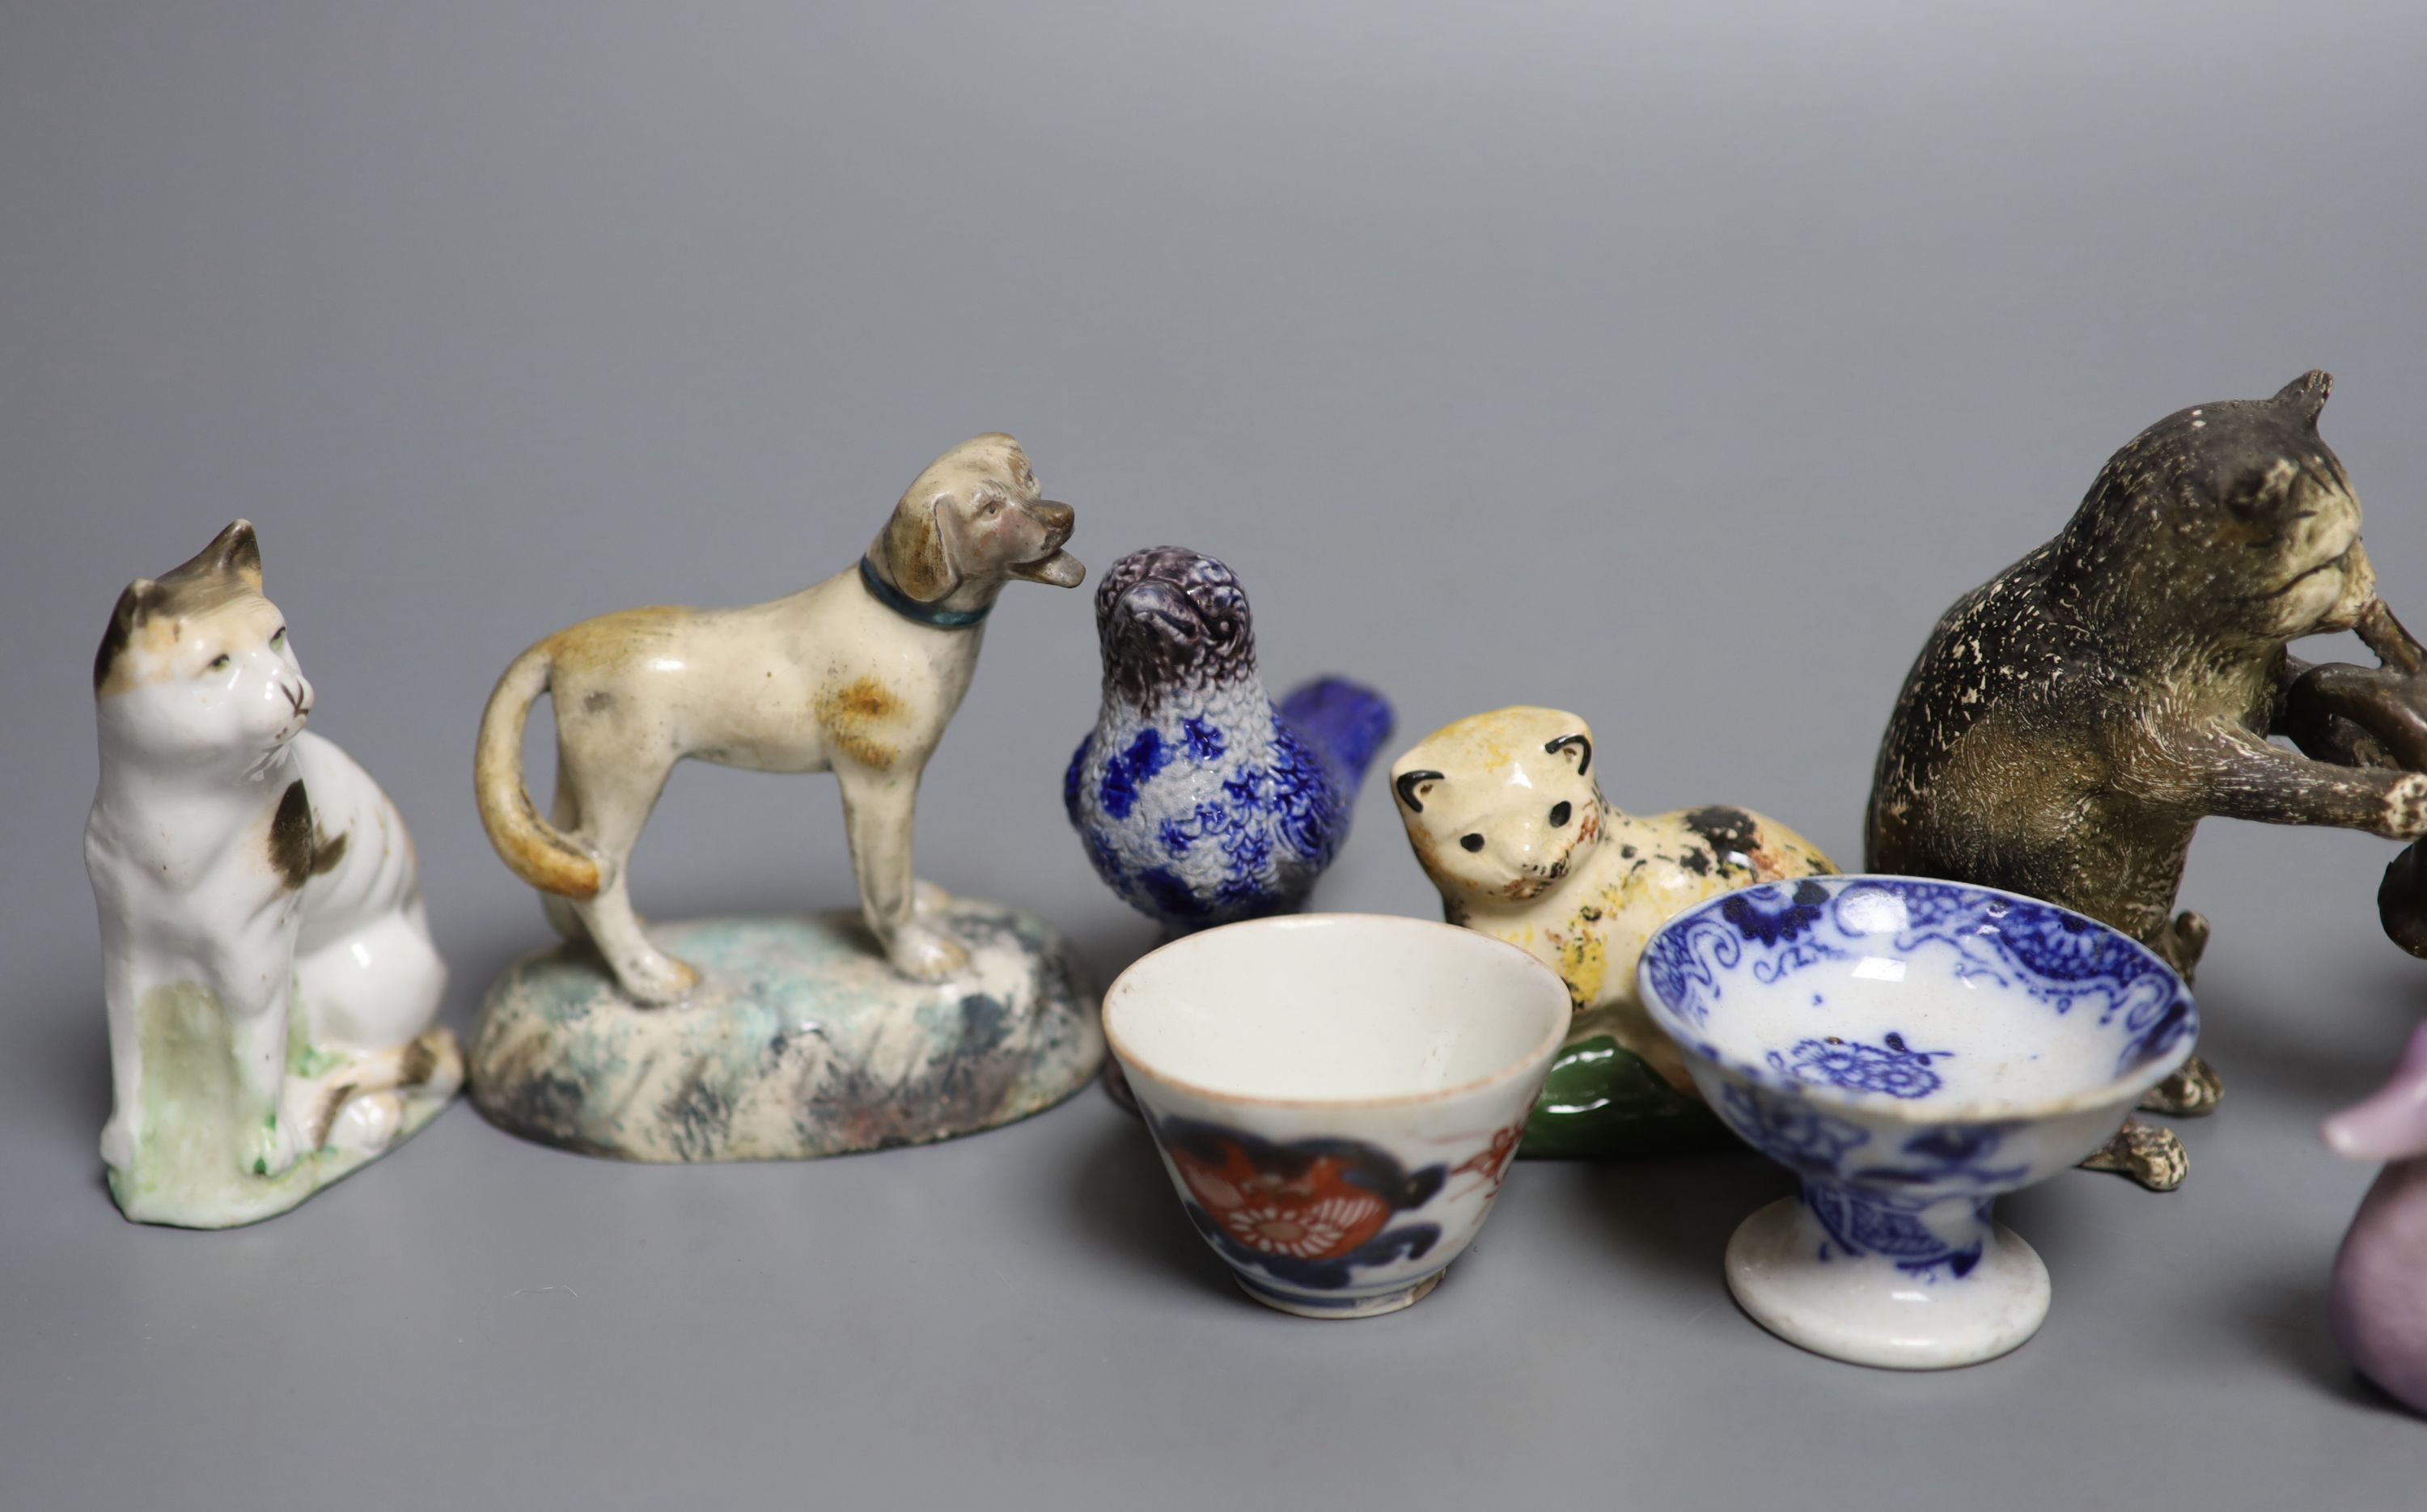 A quantity of miniature ceramic pots, figurines, animal ornaments etc